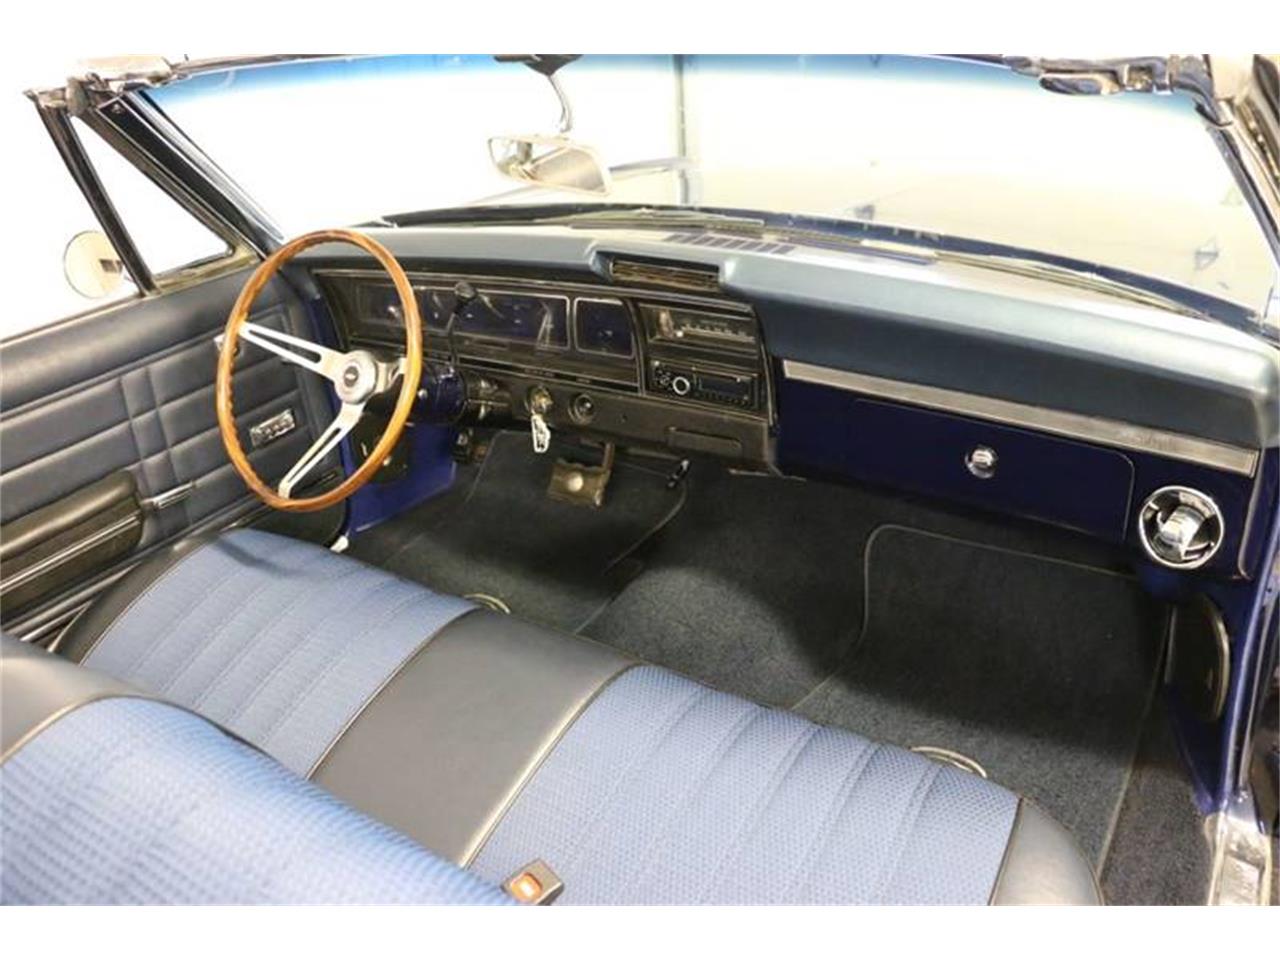 1968 Chevrolet Impala for sale in Stratford, WI – photo 52